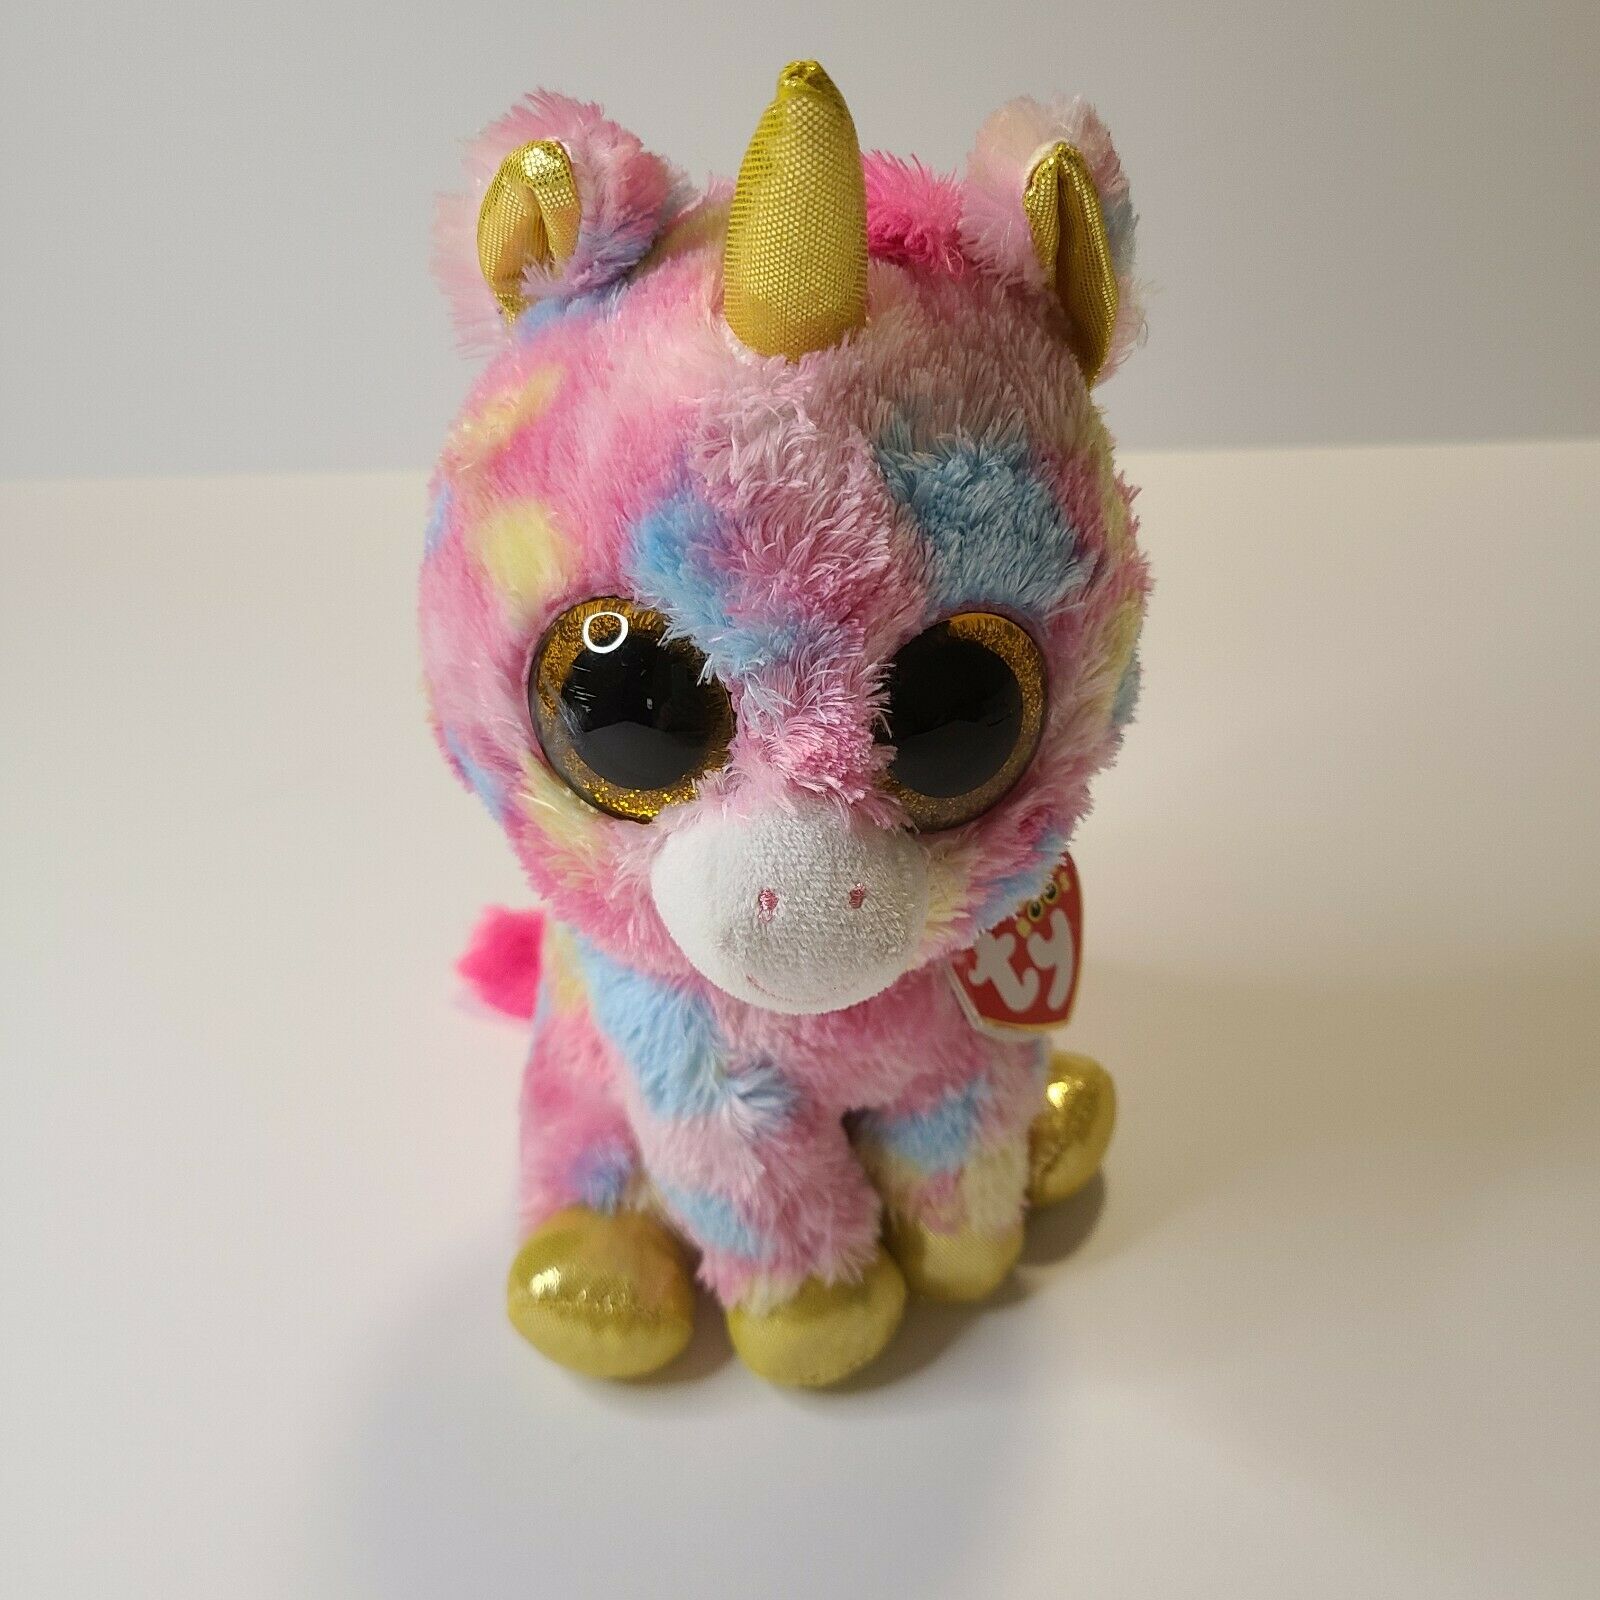 Ty Beanie Boos Fantasia 10" Plush Toy Stuffed Animal Unicorn Pink Pastel Glitter